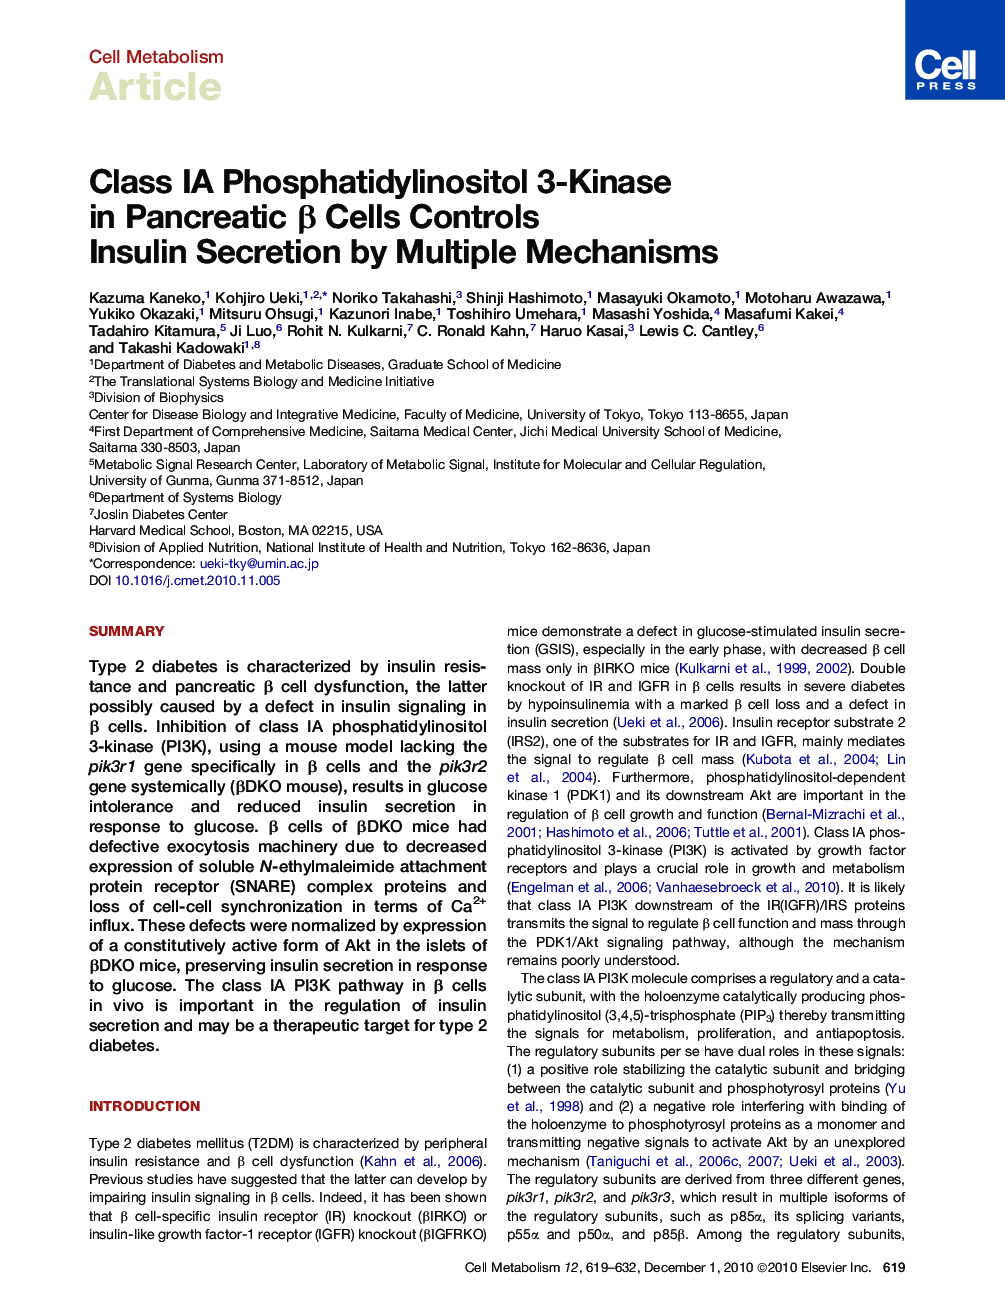 Class IA Phosphatidylinositol 3-Kinase in Pancreatic β Cells Controls Insulin Secretion by Multiple Mechanisms